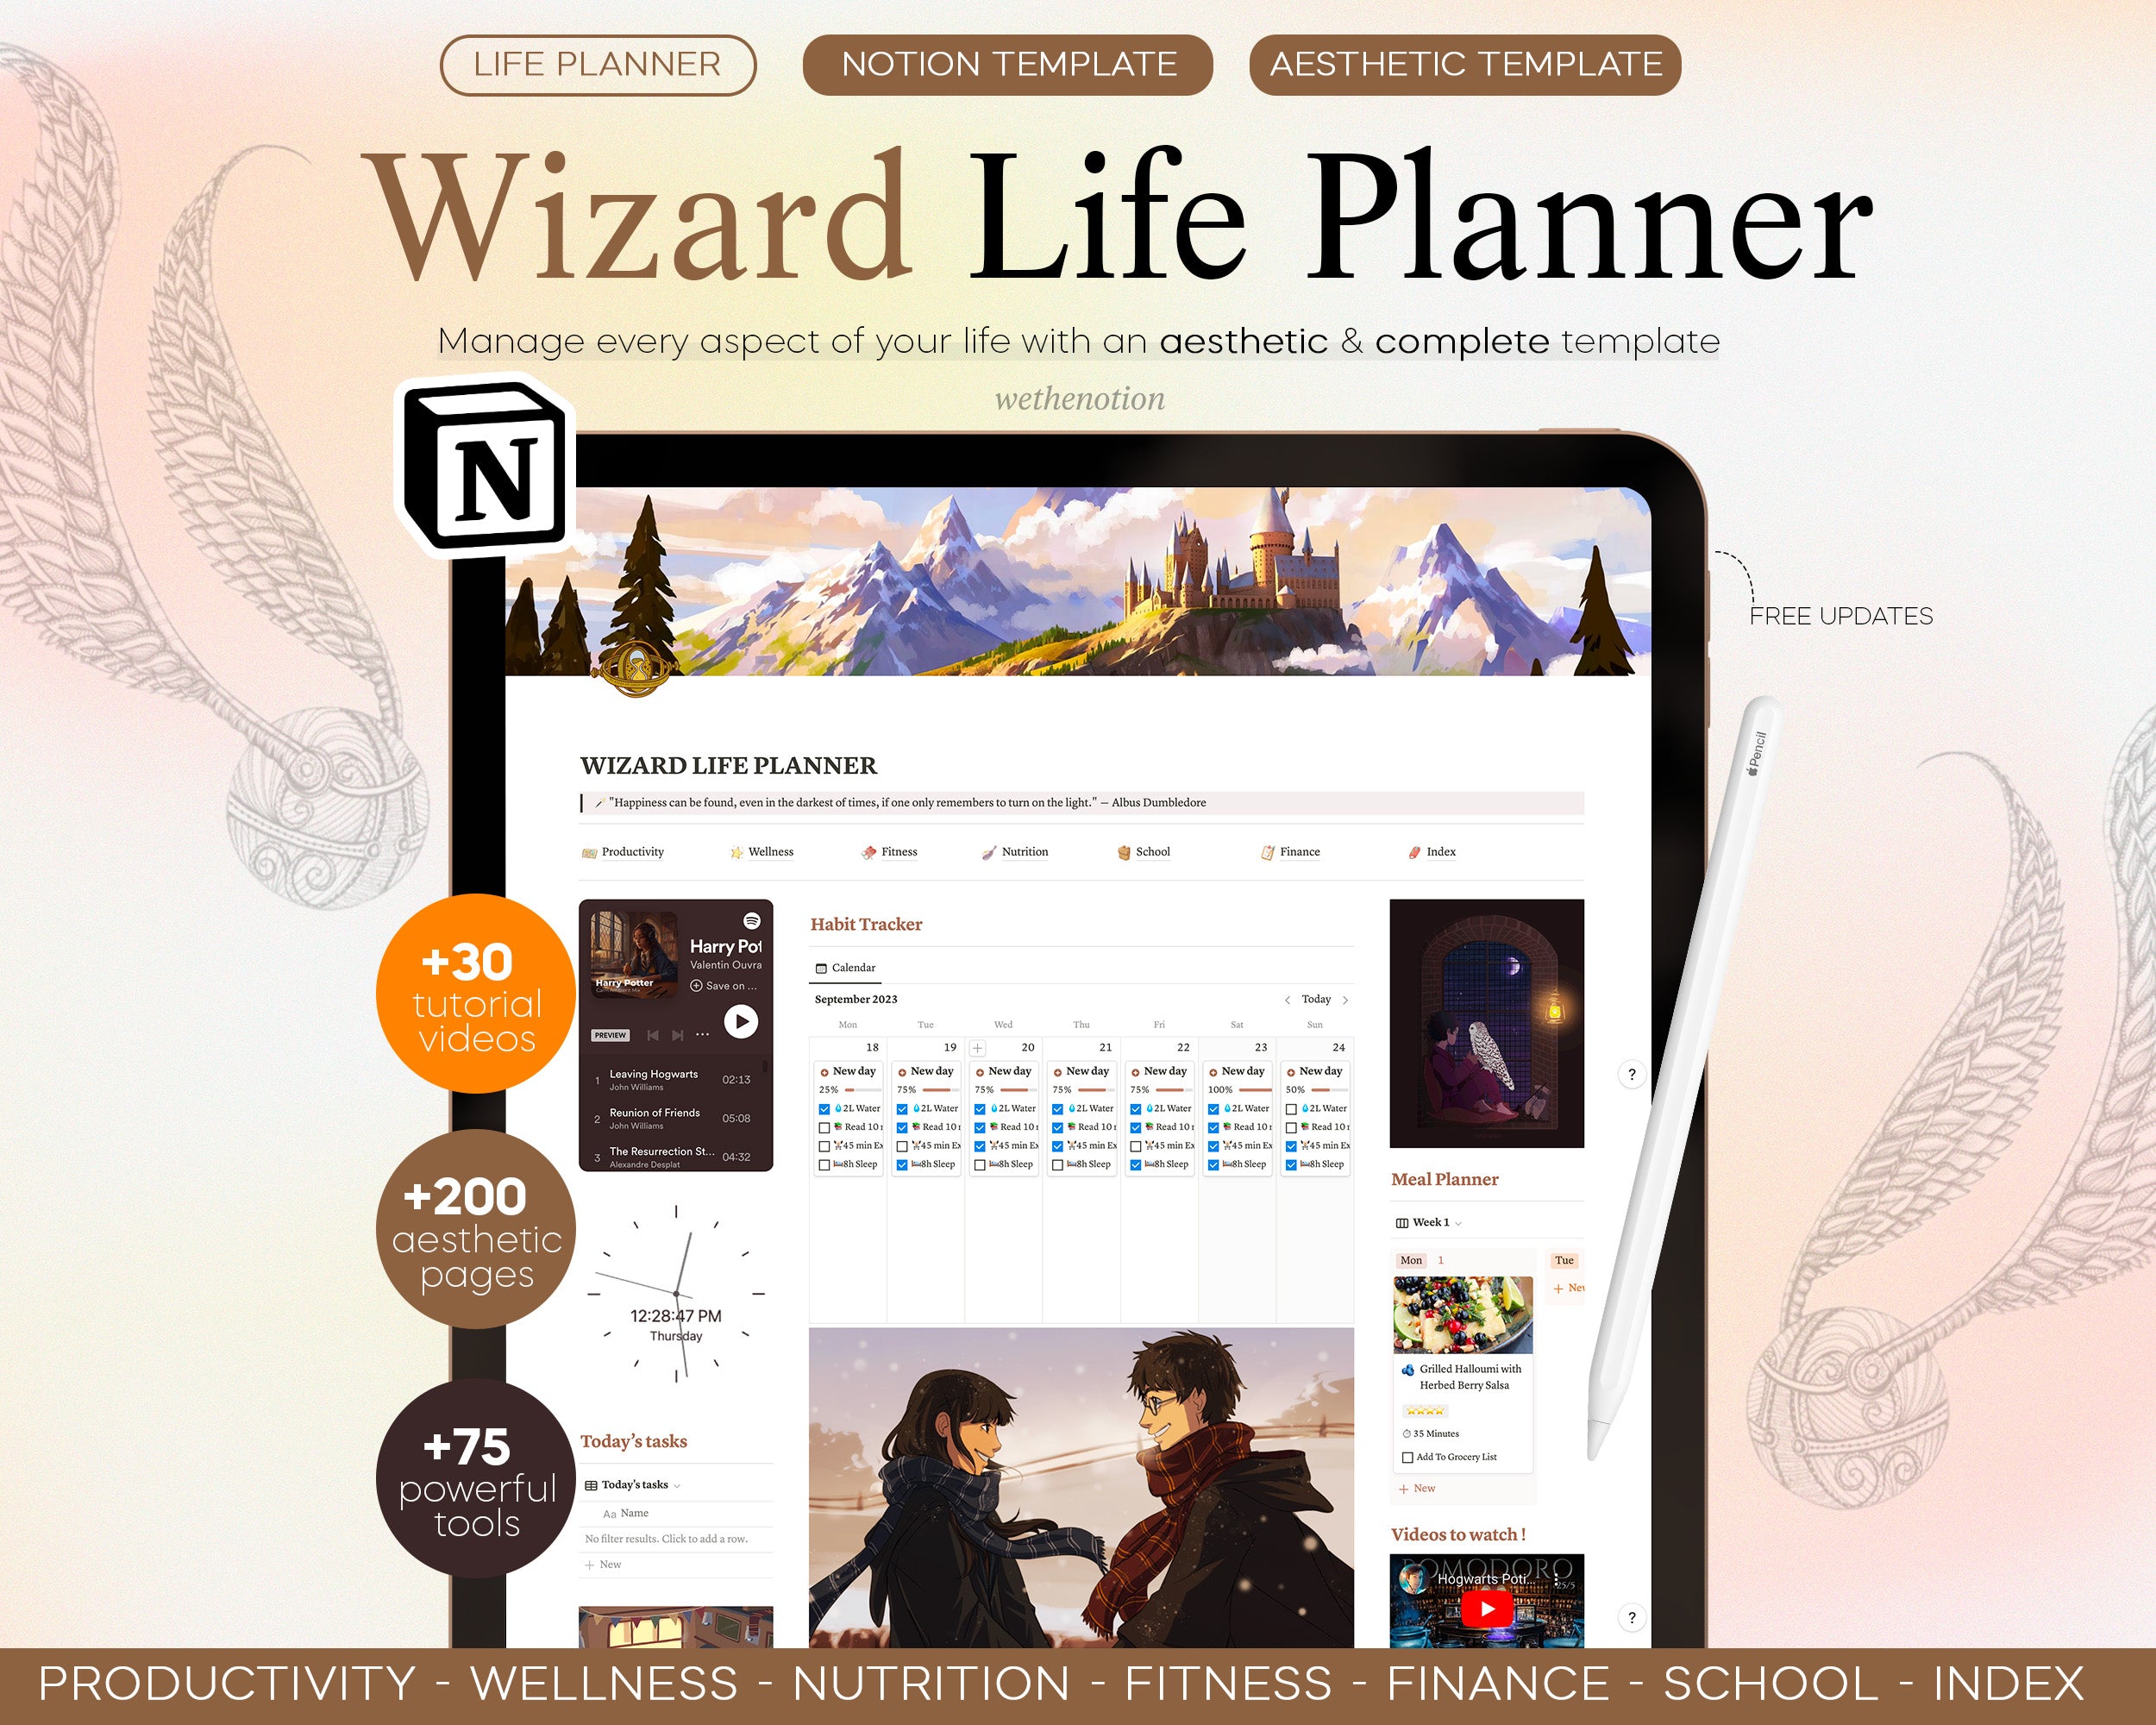 Harry Potter Ultimate Life Planner